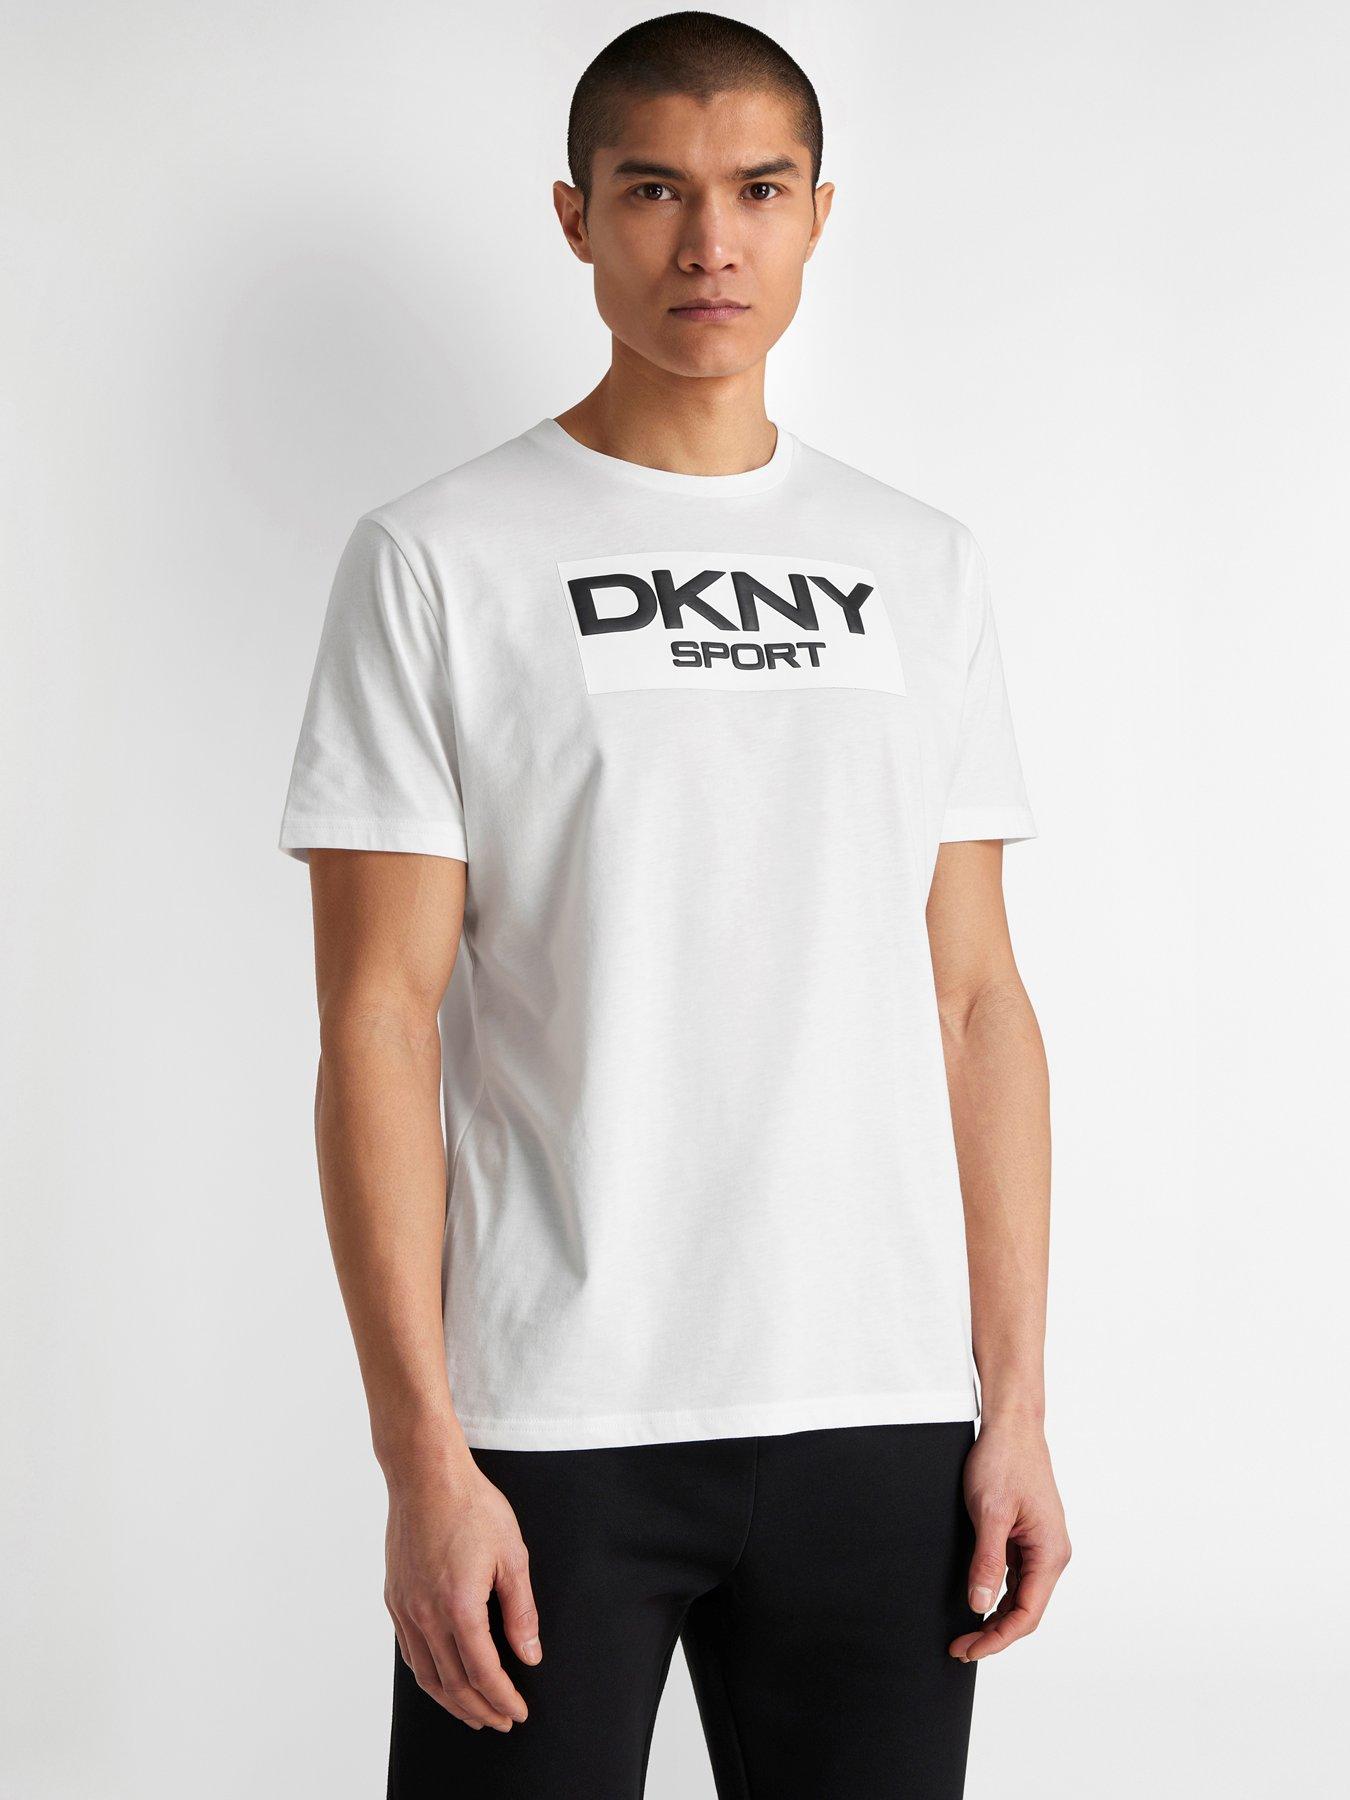 DKNY SPORT Richmond Hill T-shirt - White | very.co.uk